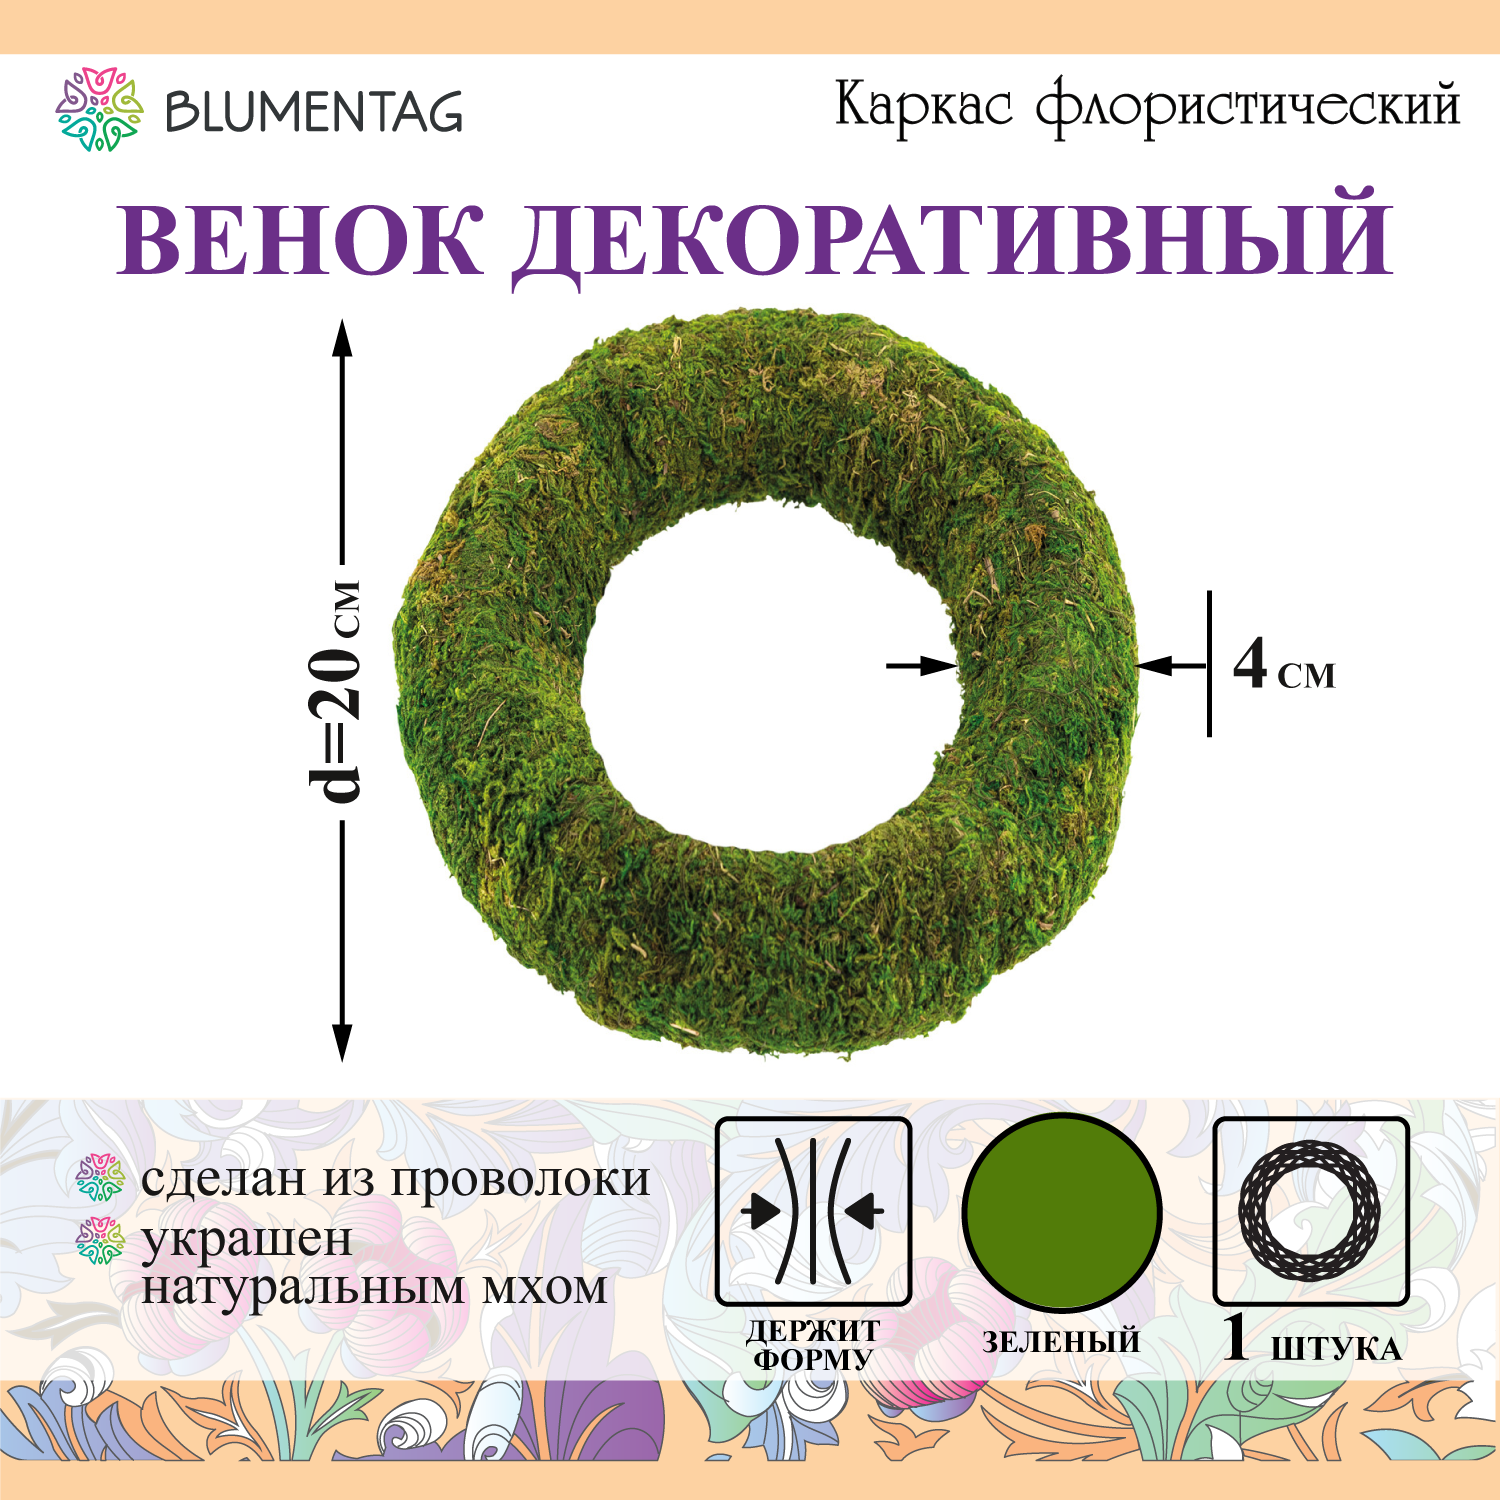 Флористика "Blumentag" MRB-20 флористический каркас "Мох" 20 см зеленый